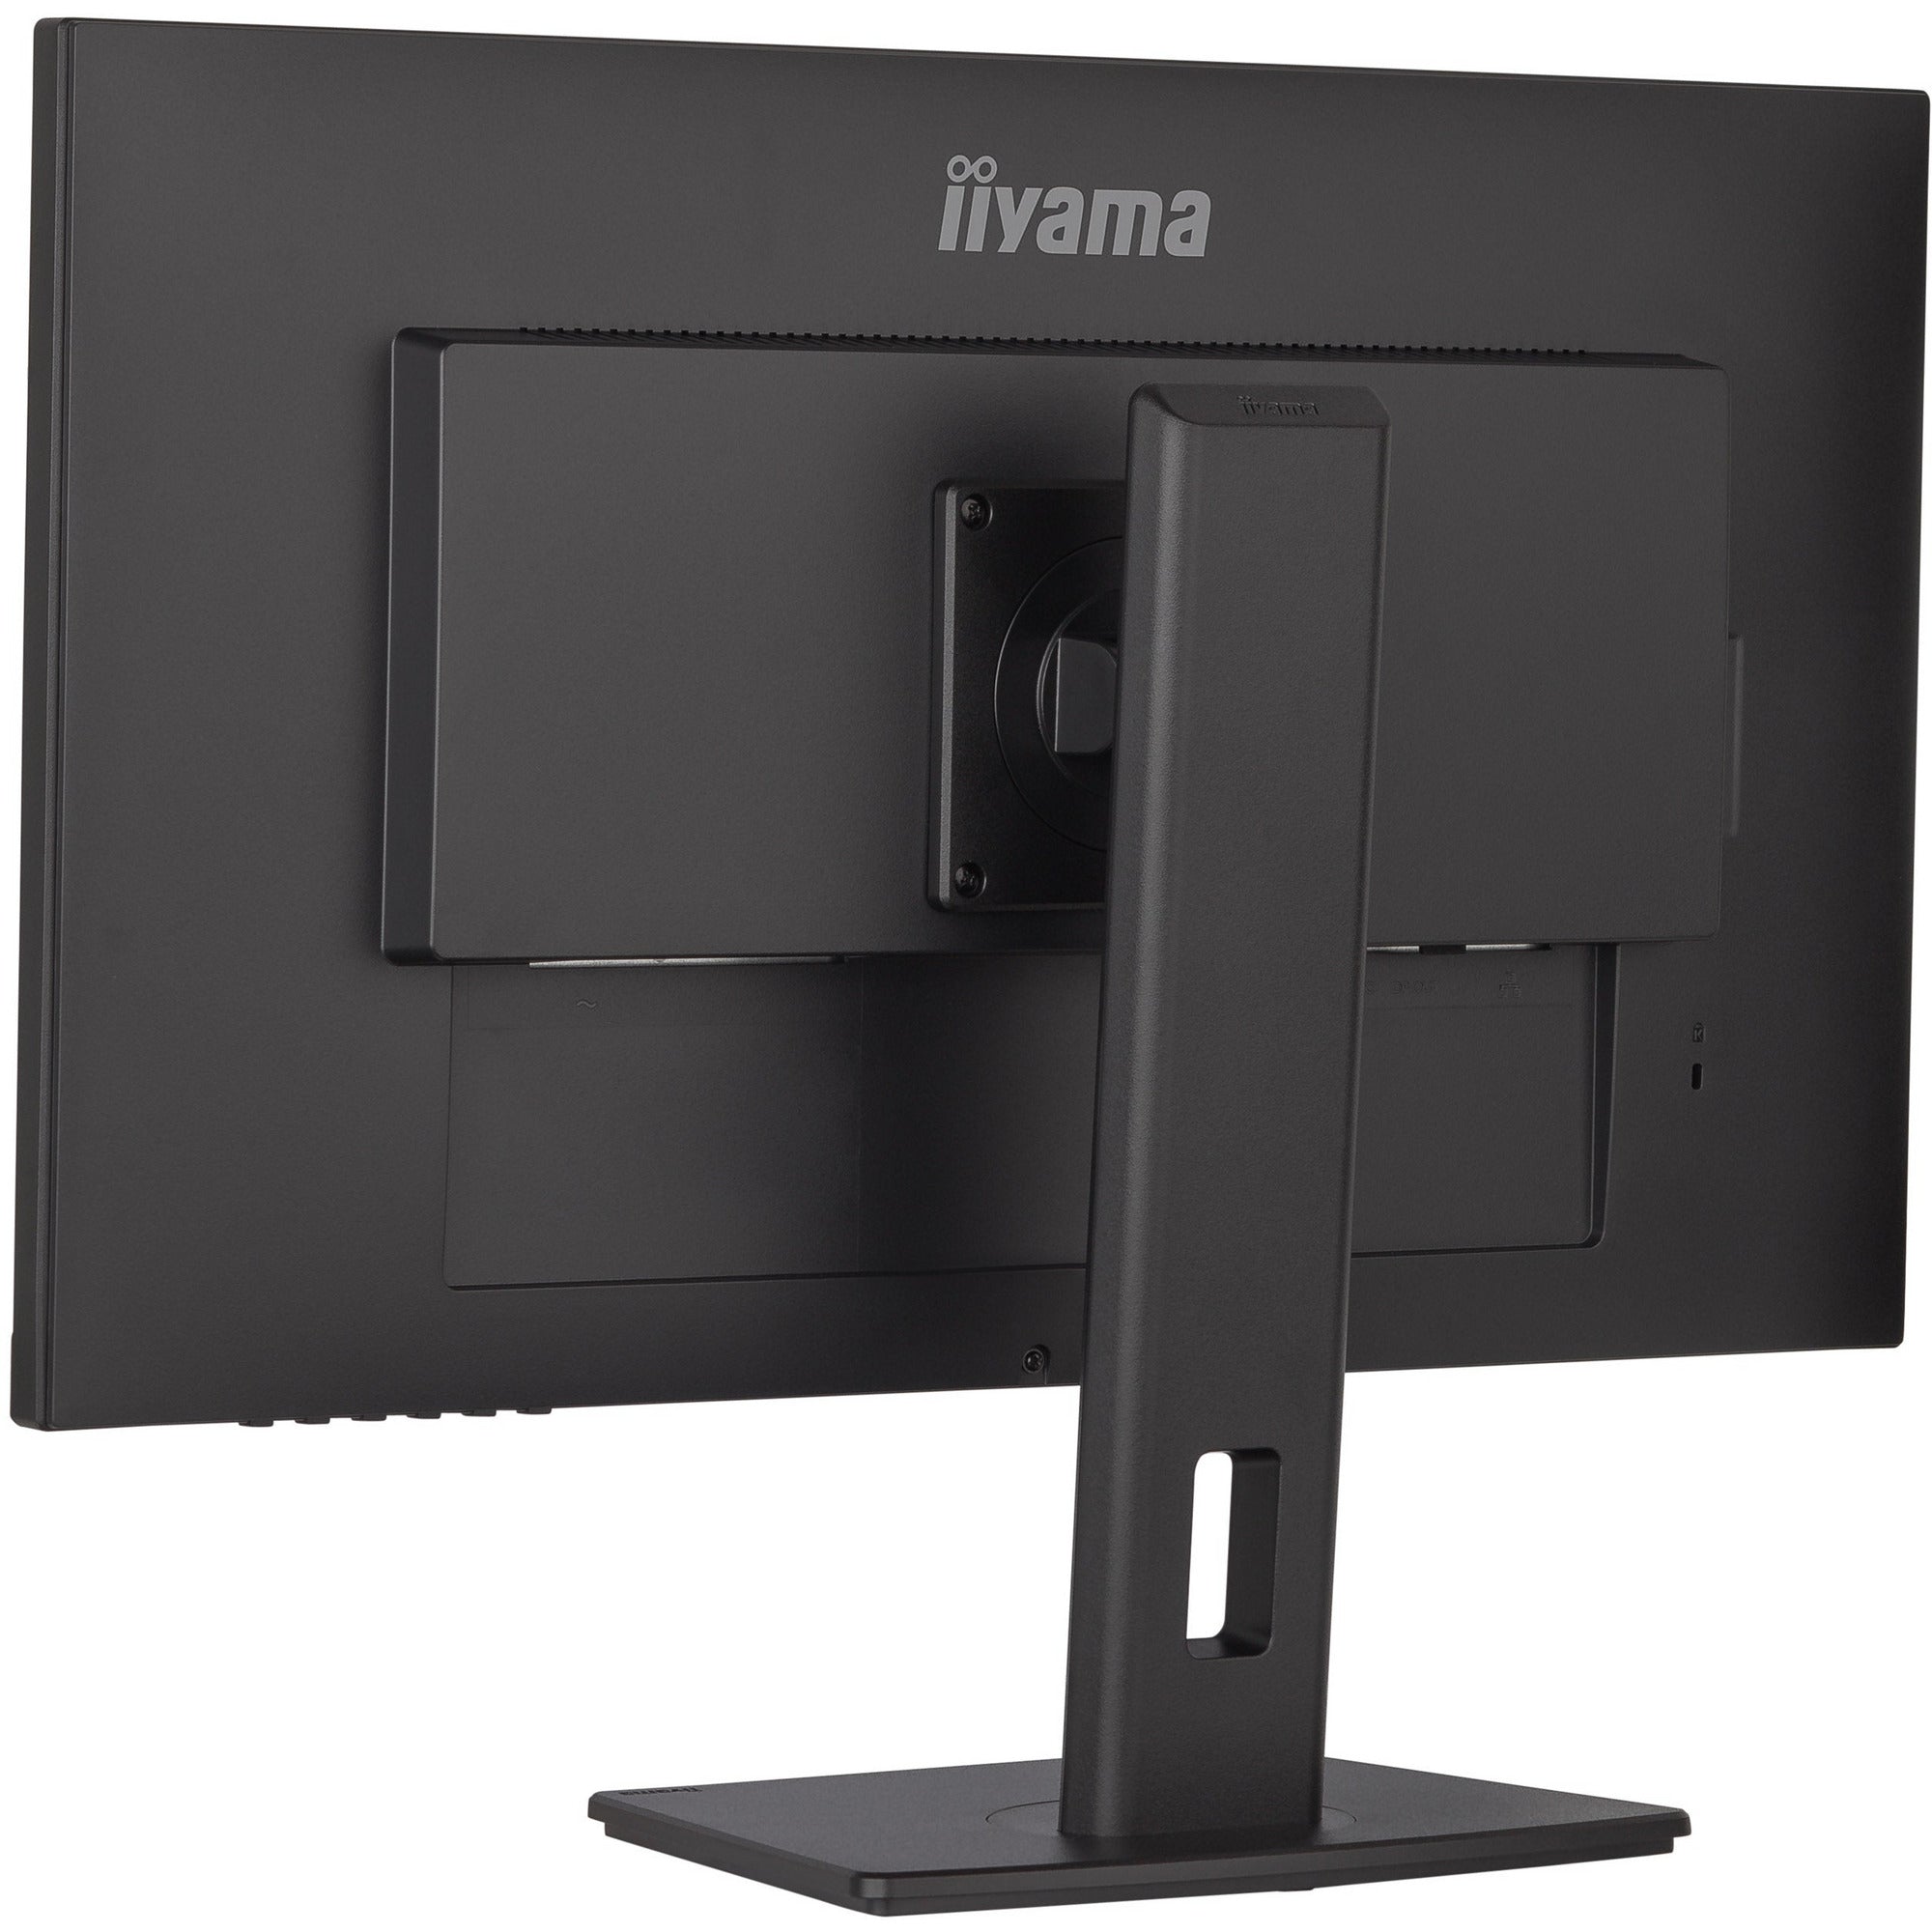 iiyama ProLite XUB2792HSN-B5 27" IPS LCD Monitor with USB-C dock and RJ45 Port